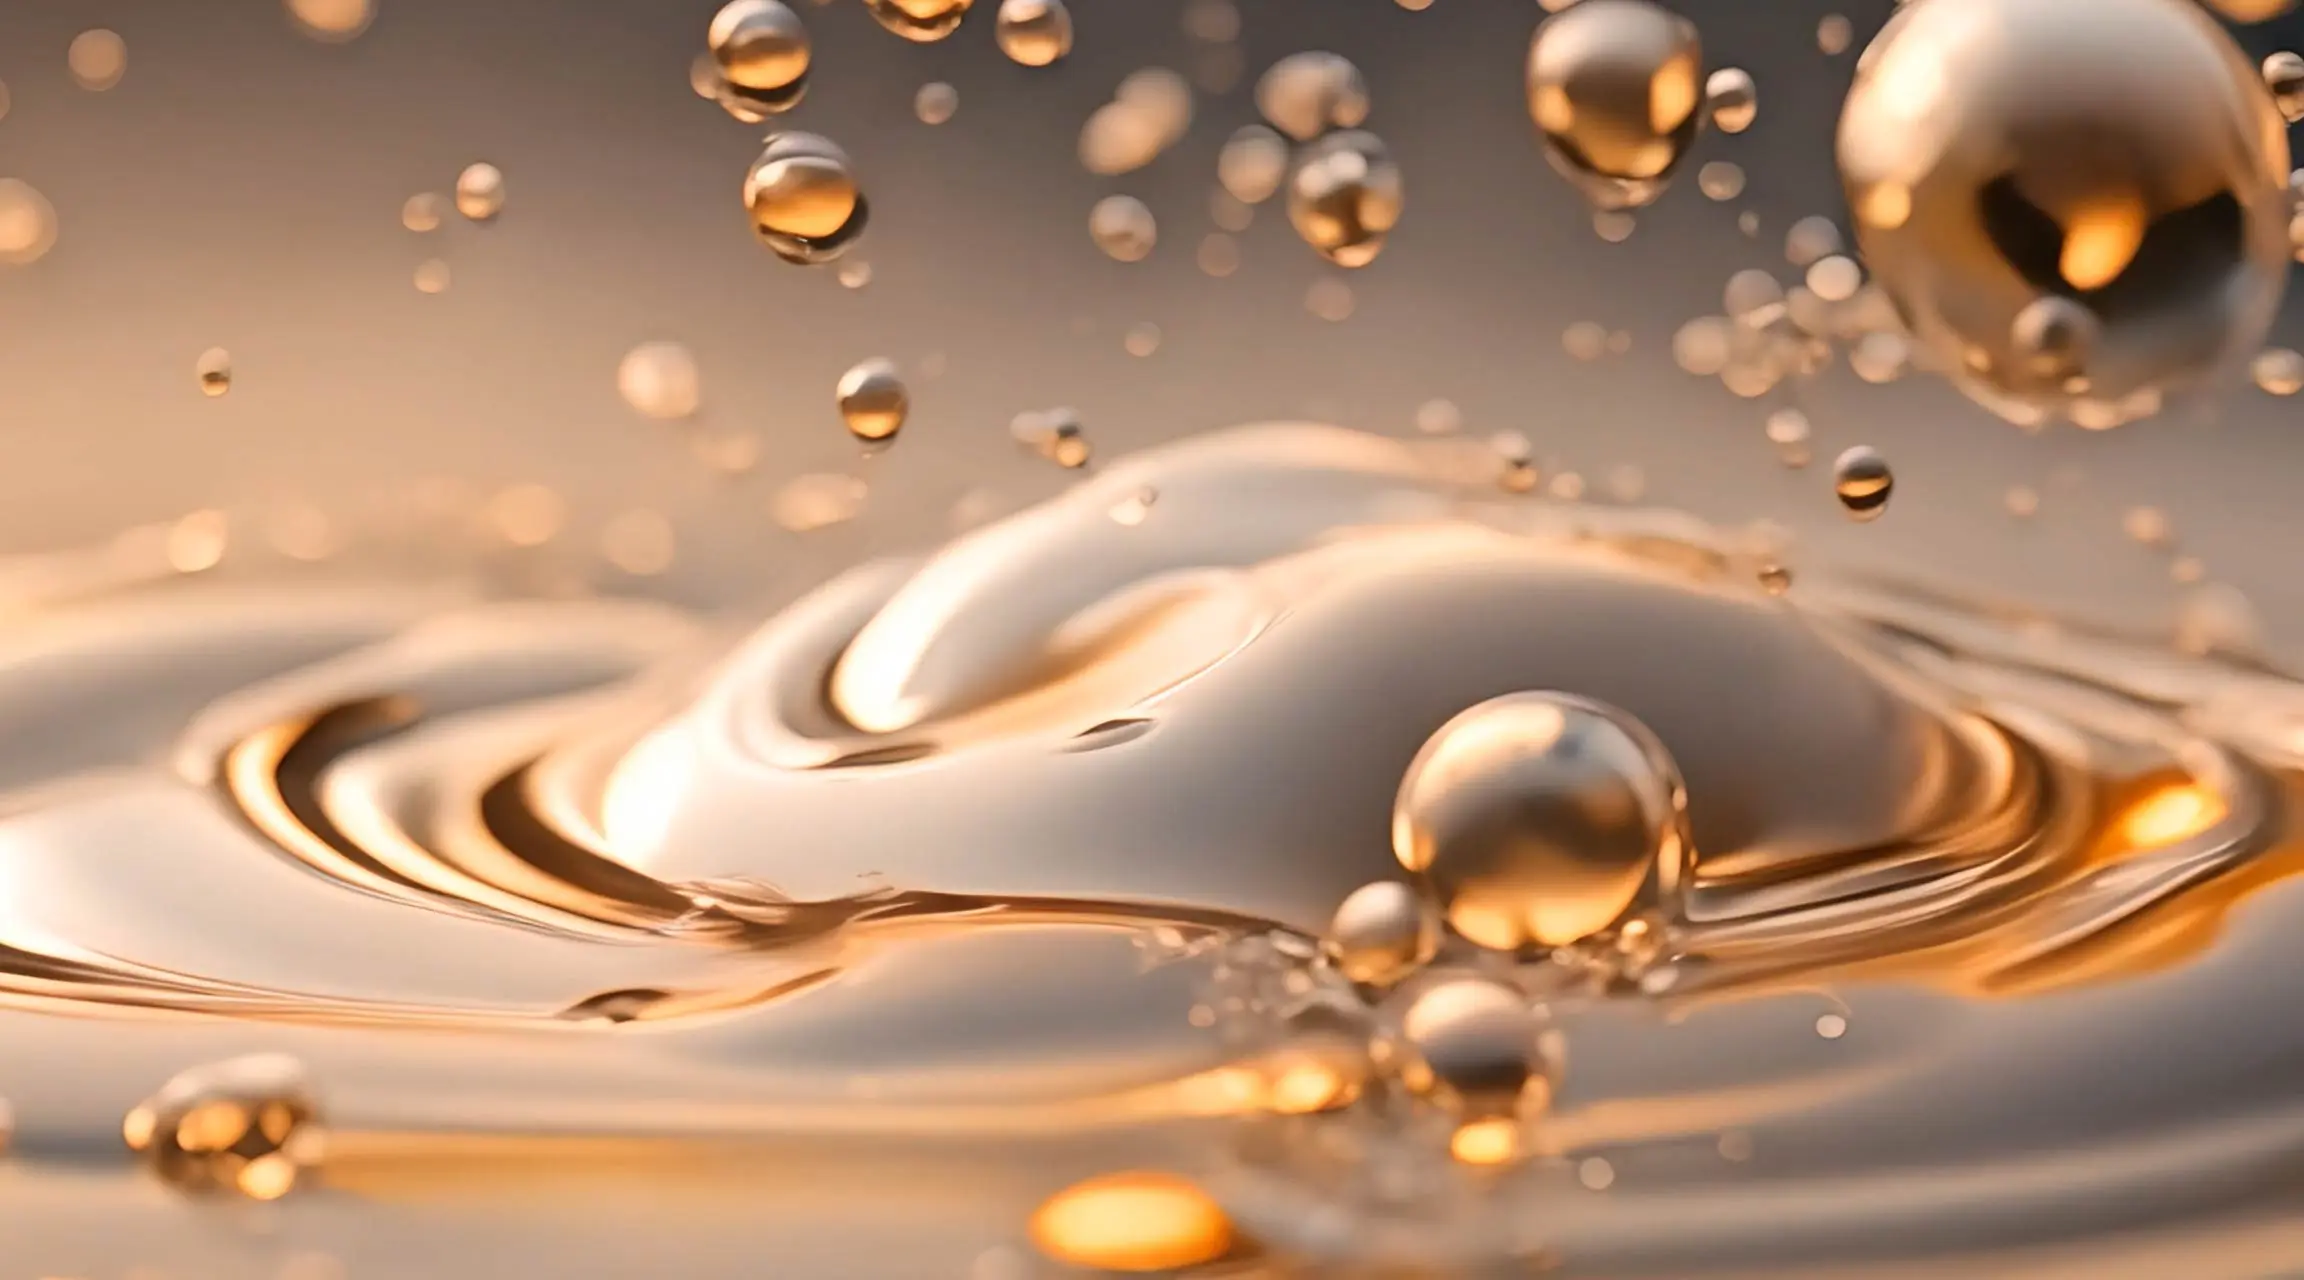 Luxurious Golden Liquid in Motion